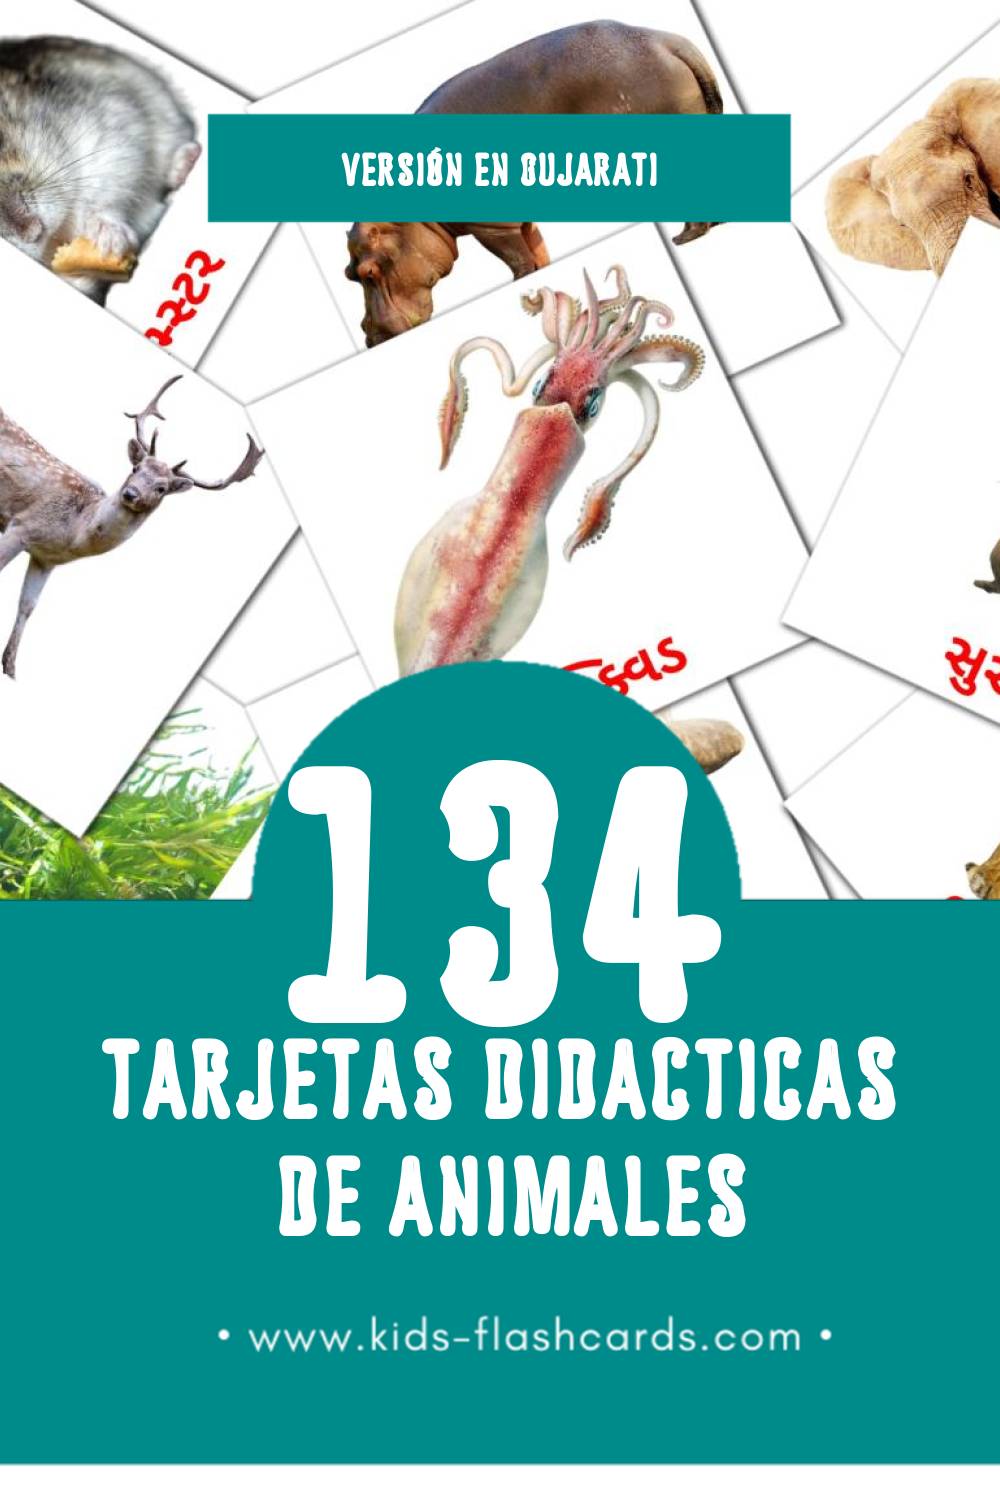 Tarjetas visuales de પ્રાણીઓ para niños pequeños (134 tarjetas en Gujarati)